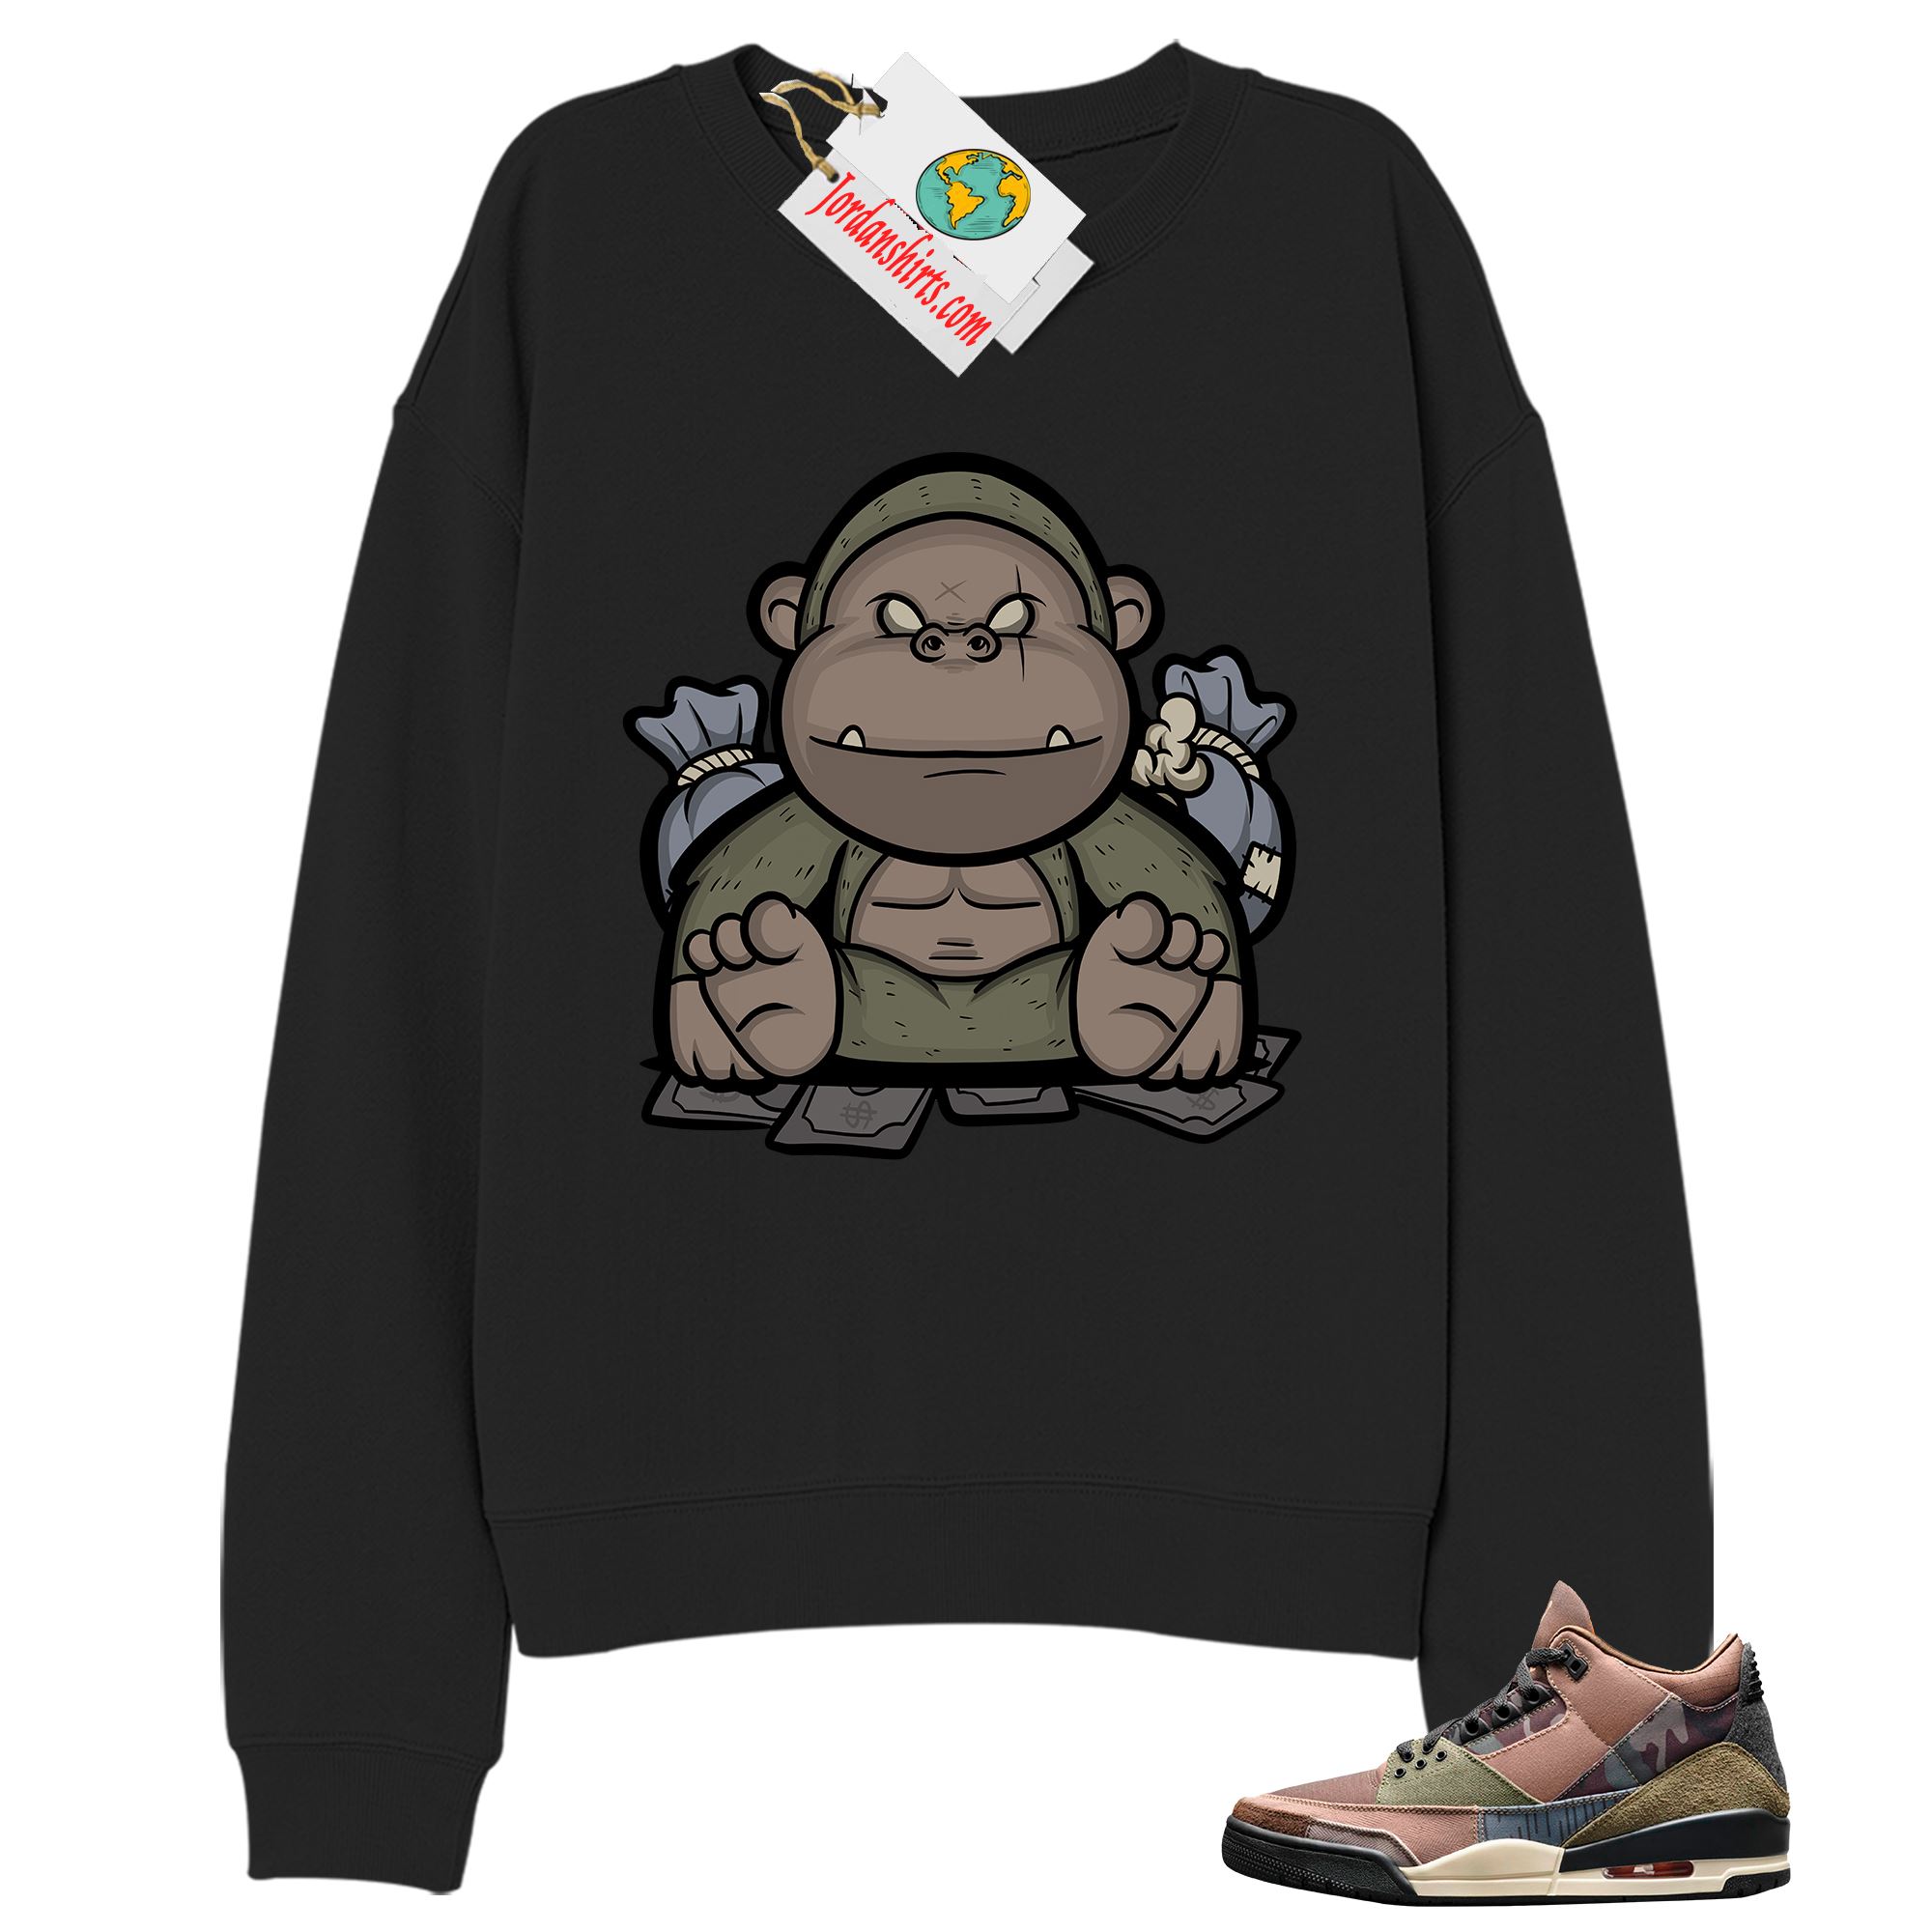 Jordan 3 Sweatshirt, Rich Gorilla With Money Black Sweatshirt Air Jordan 3 Camo 3s Plus Size Up To 5xl